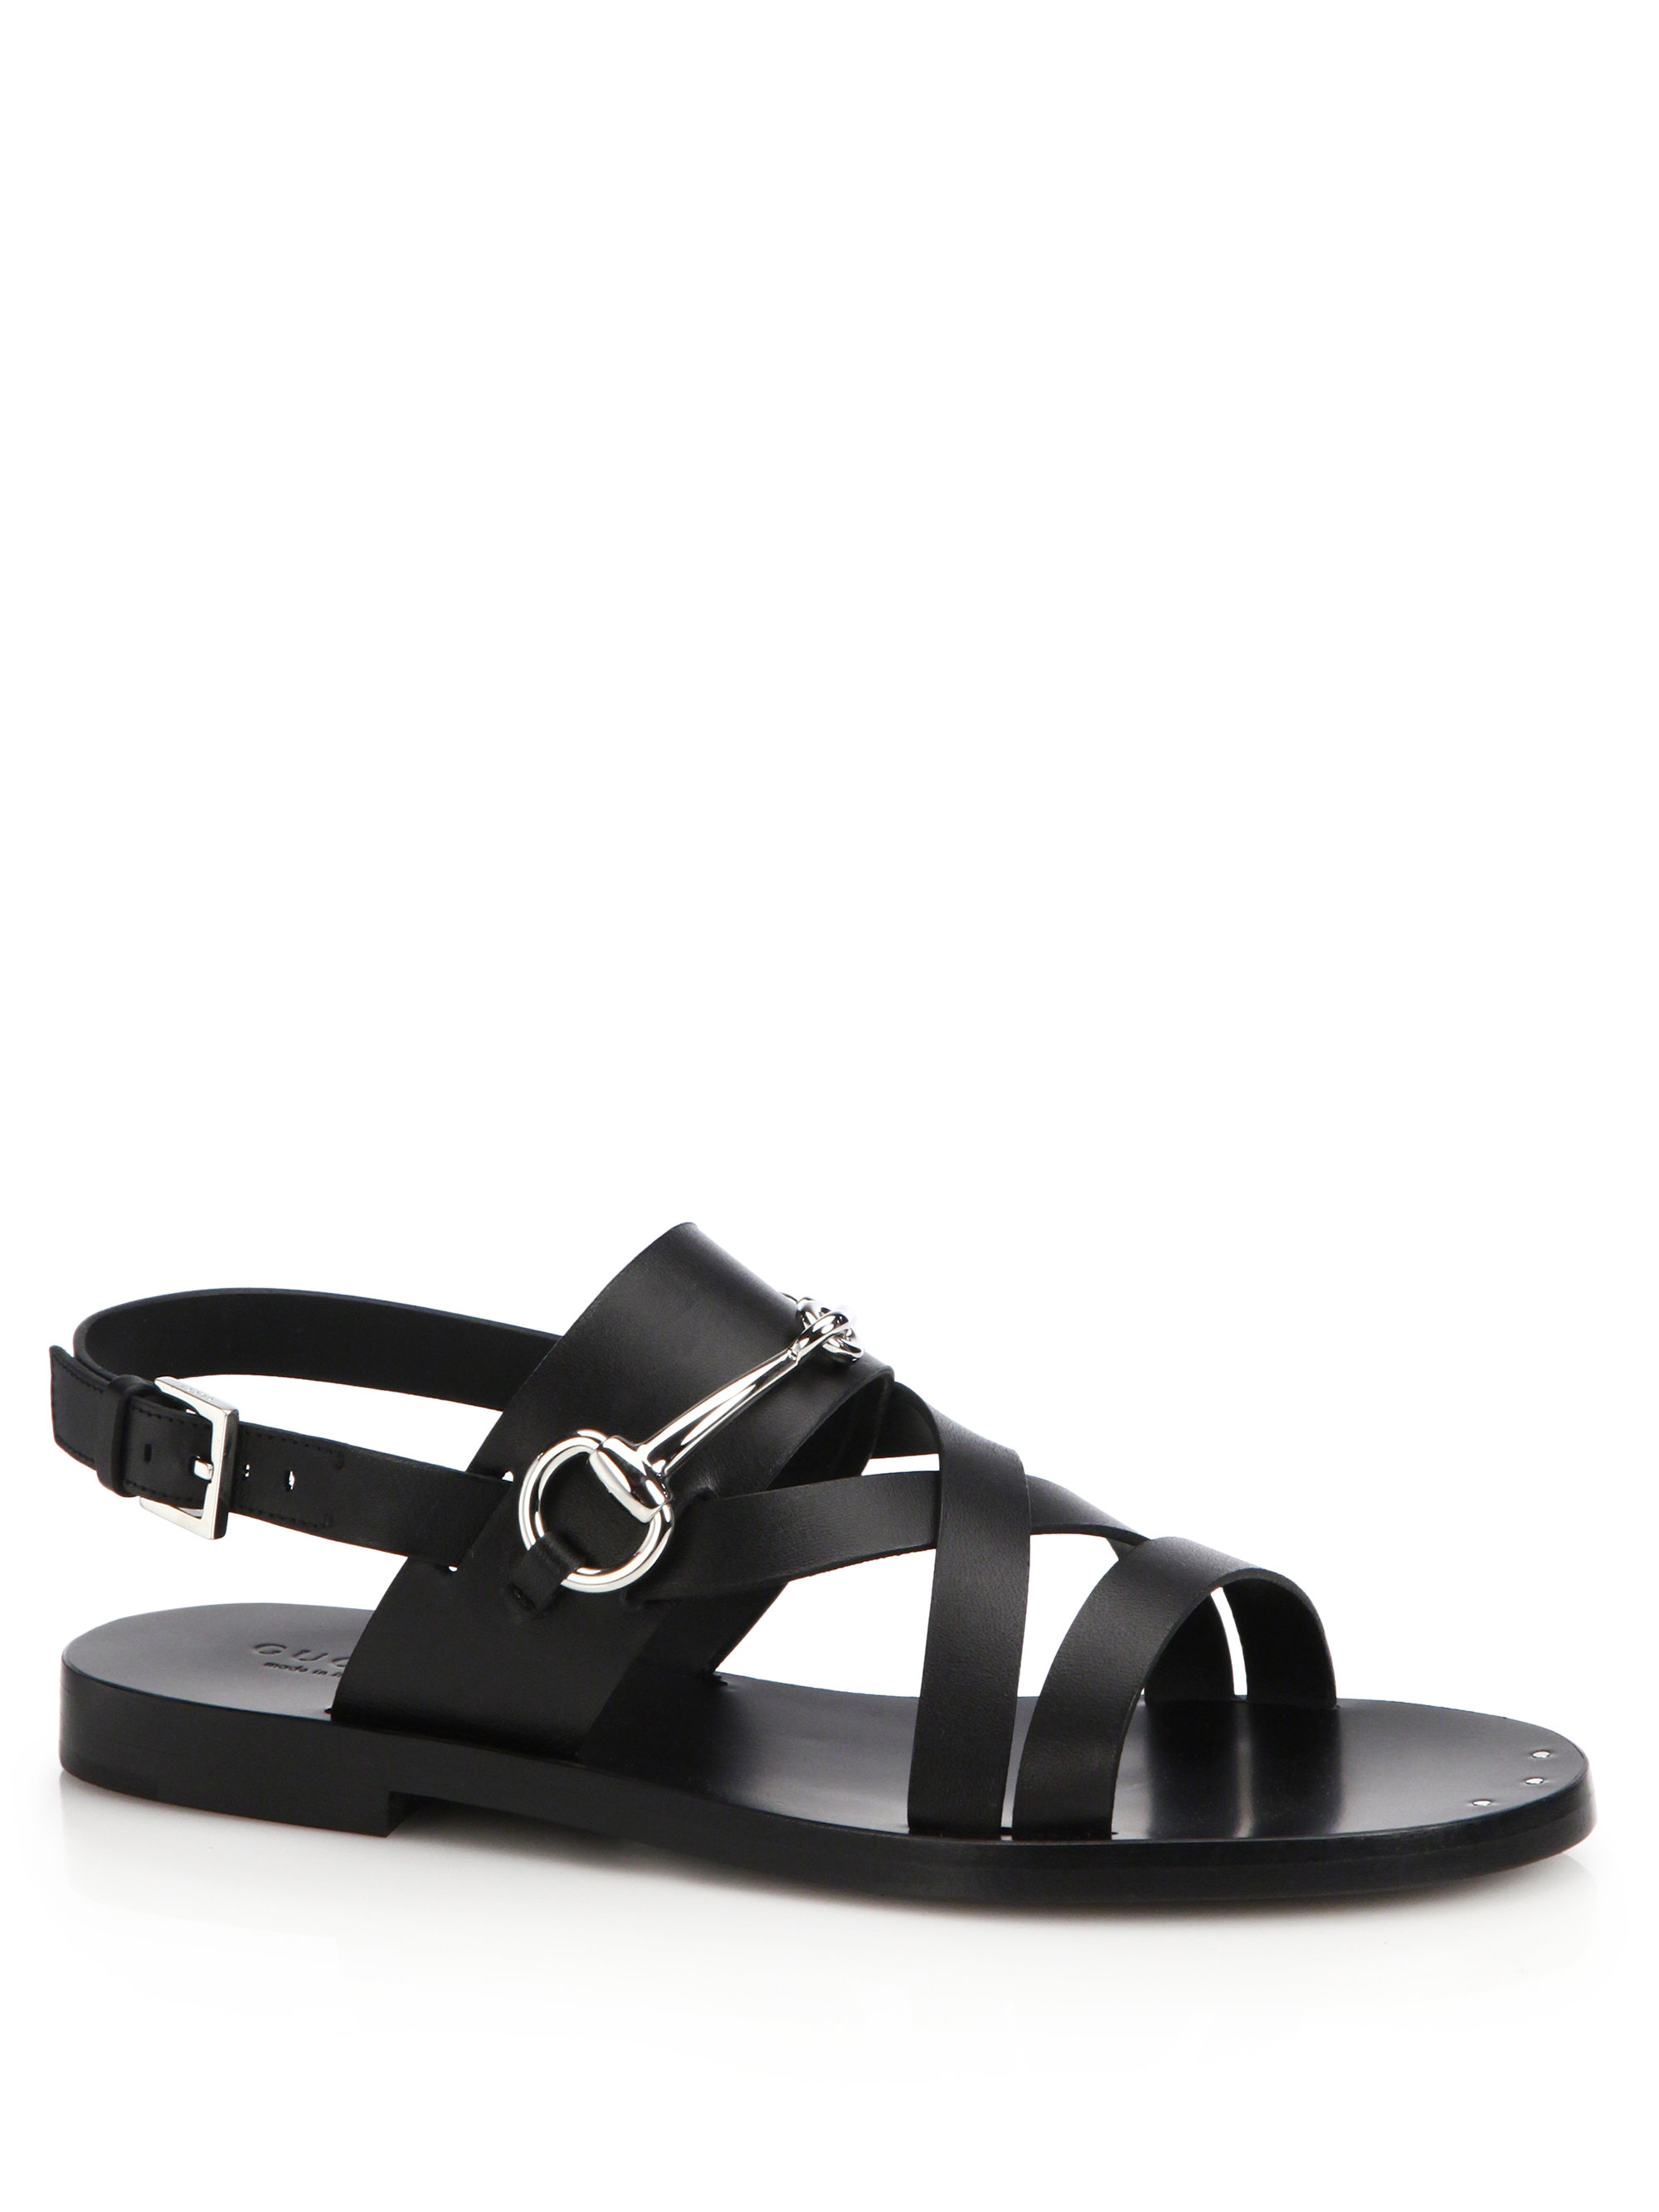 Gucci Juliette Strappy Flat Sandals in Black